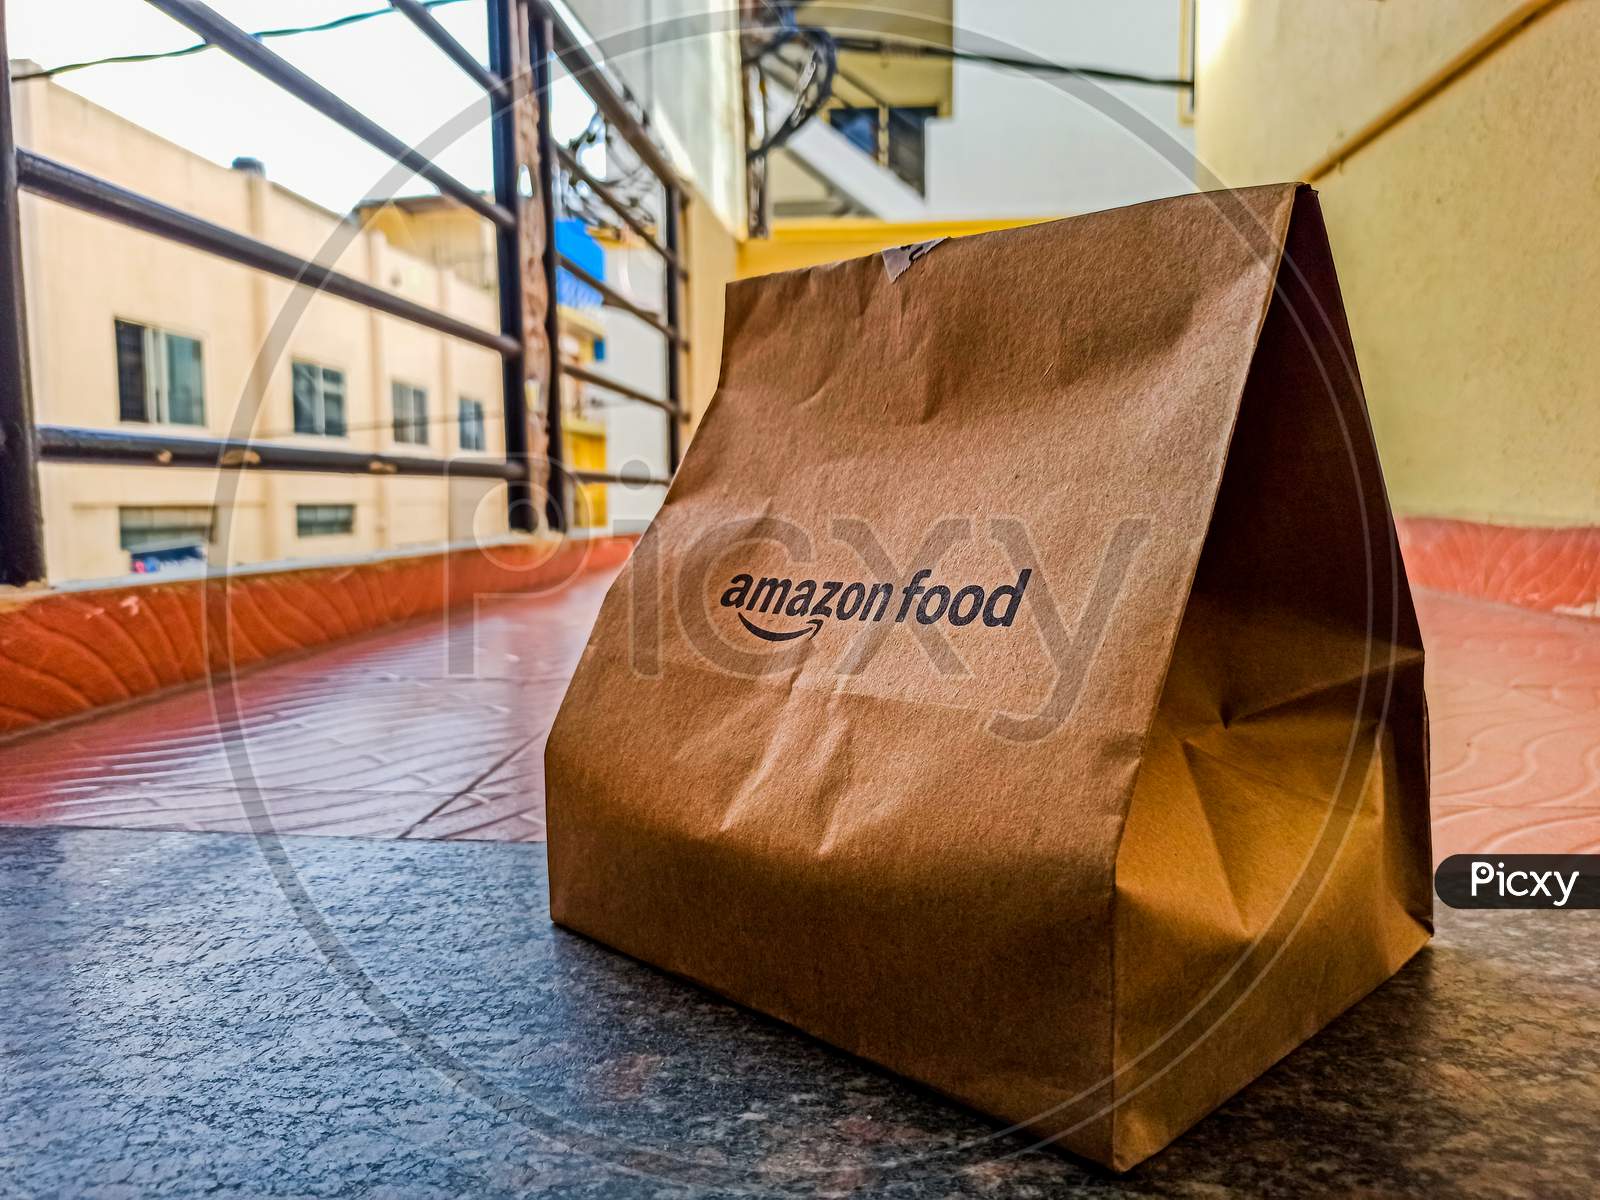 Amazon food delivery